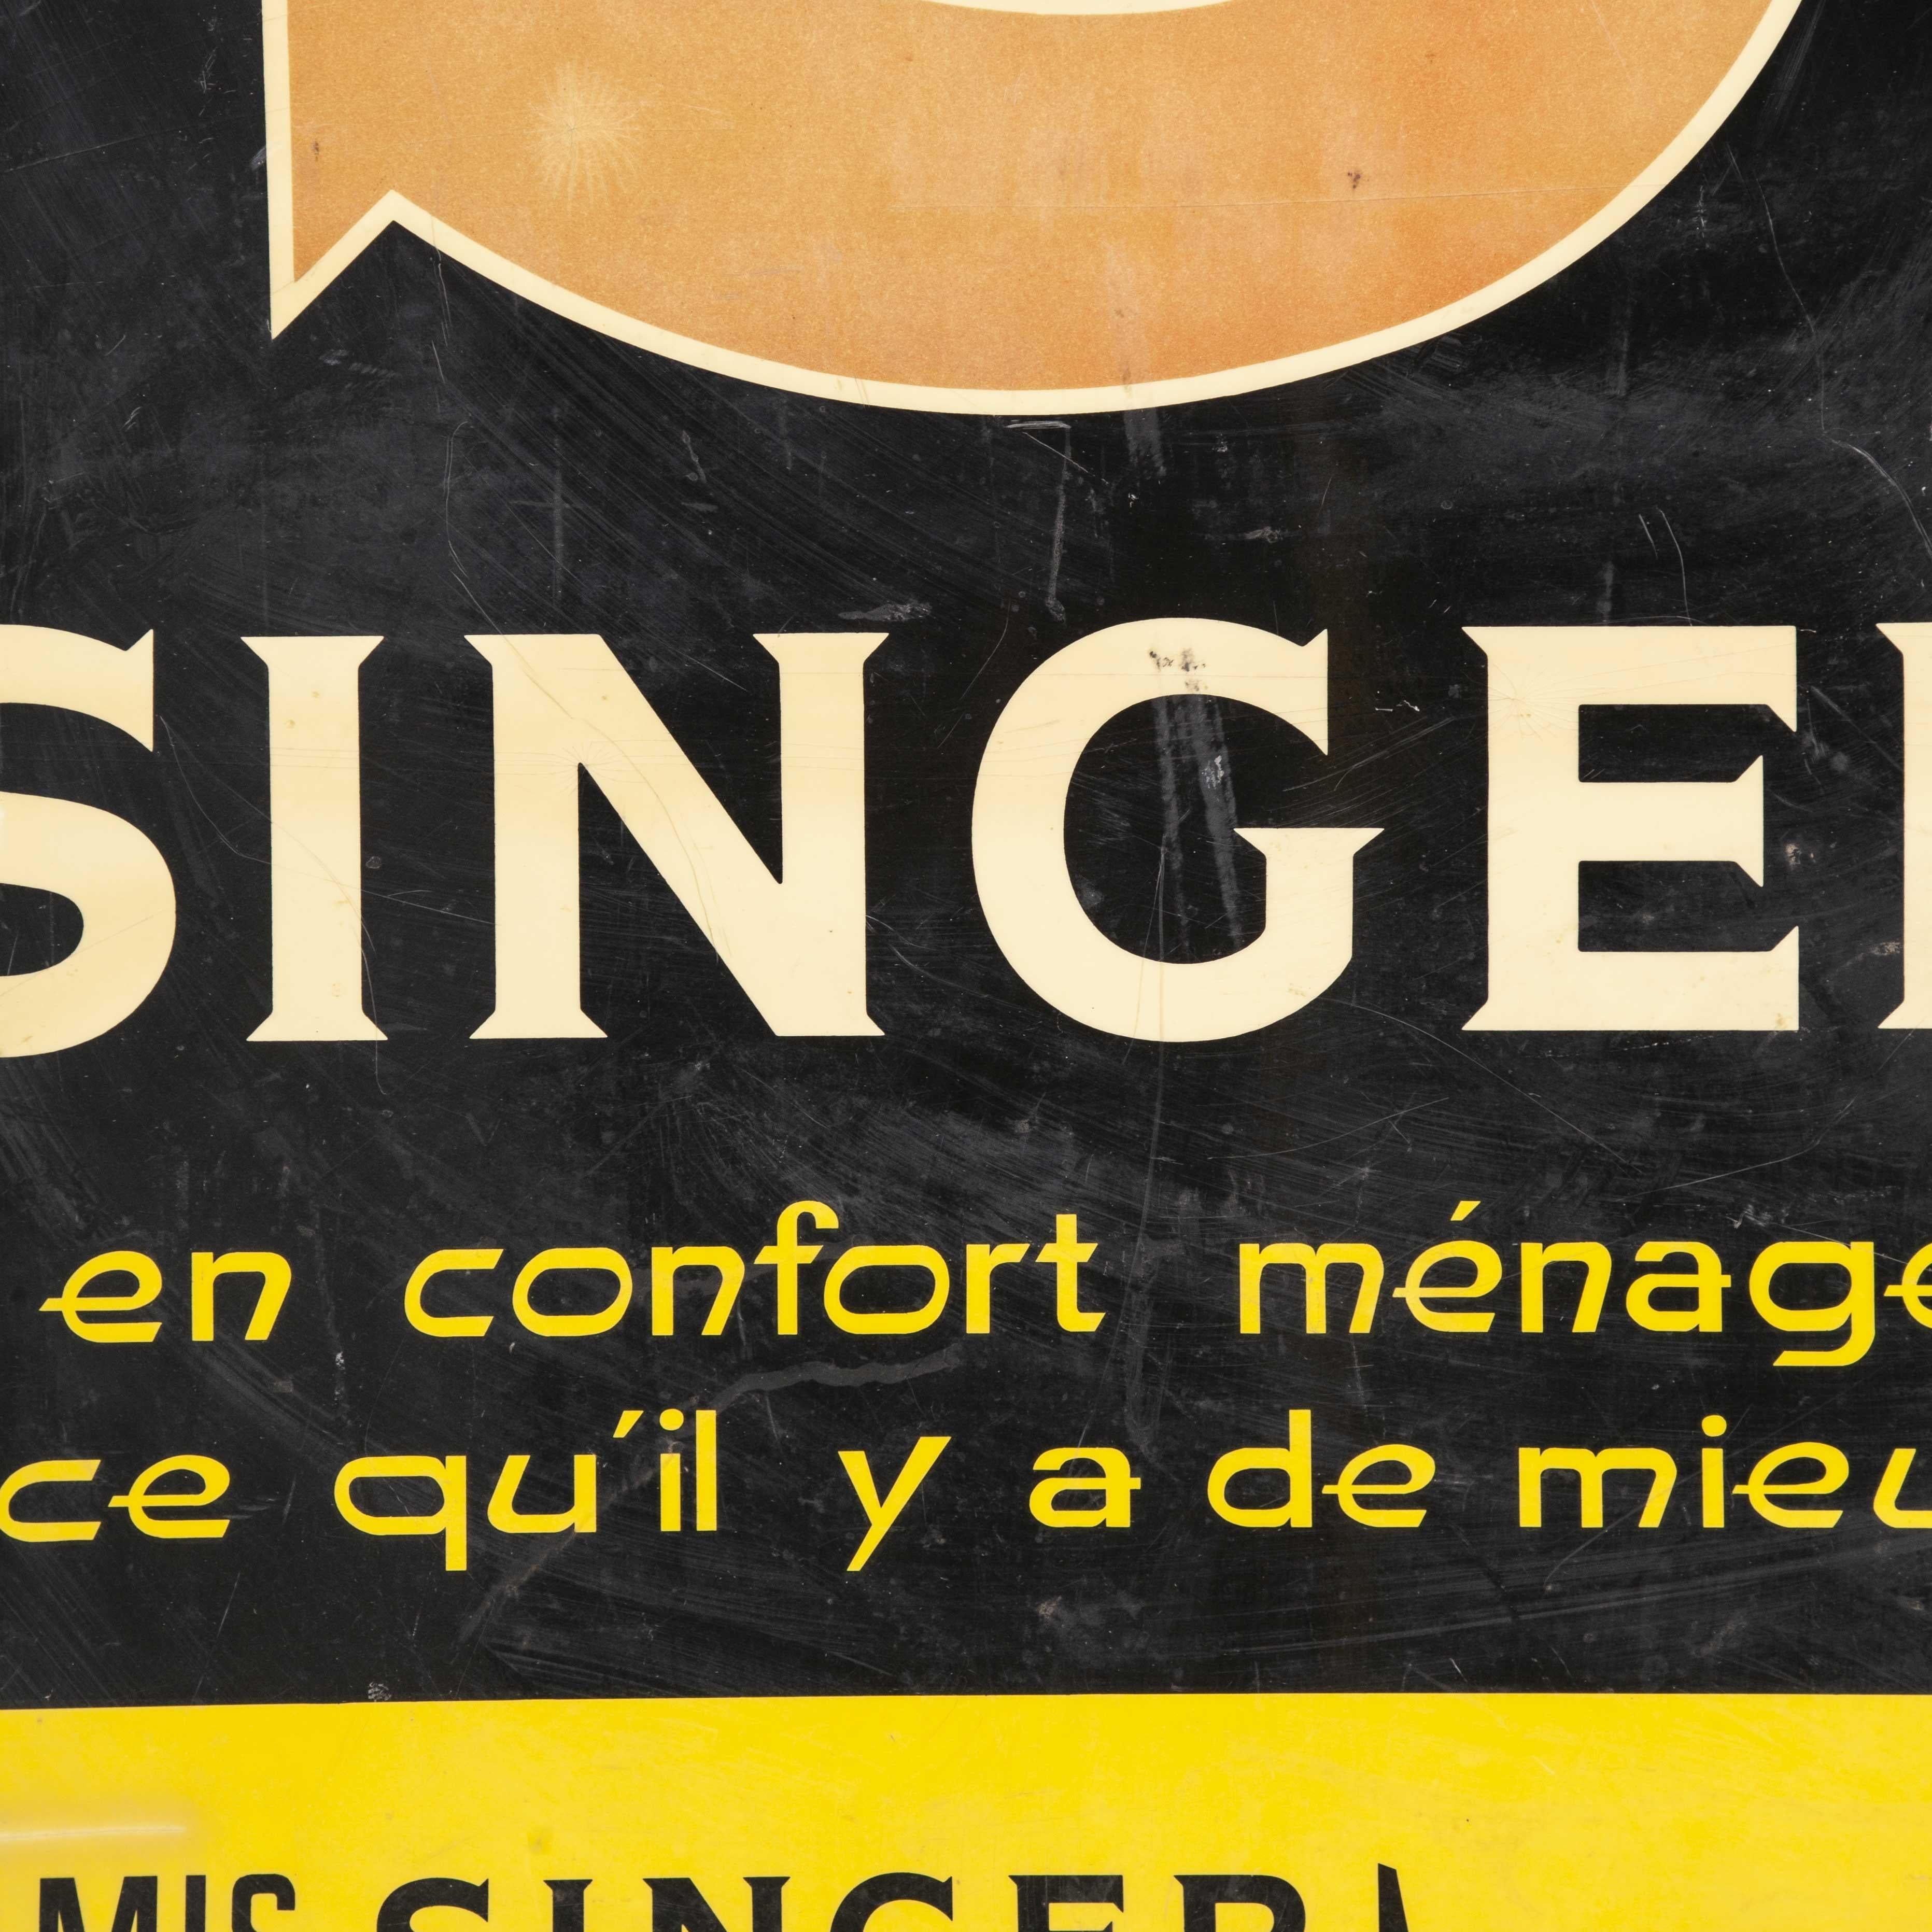 Fiberglass 1950s Singer Advertising Dealer Display Sign For Sale